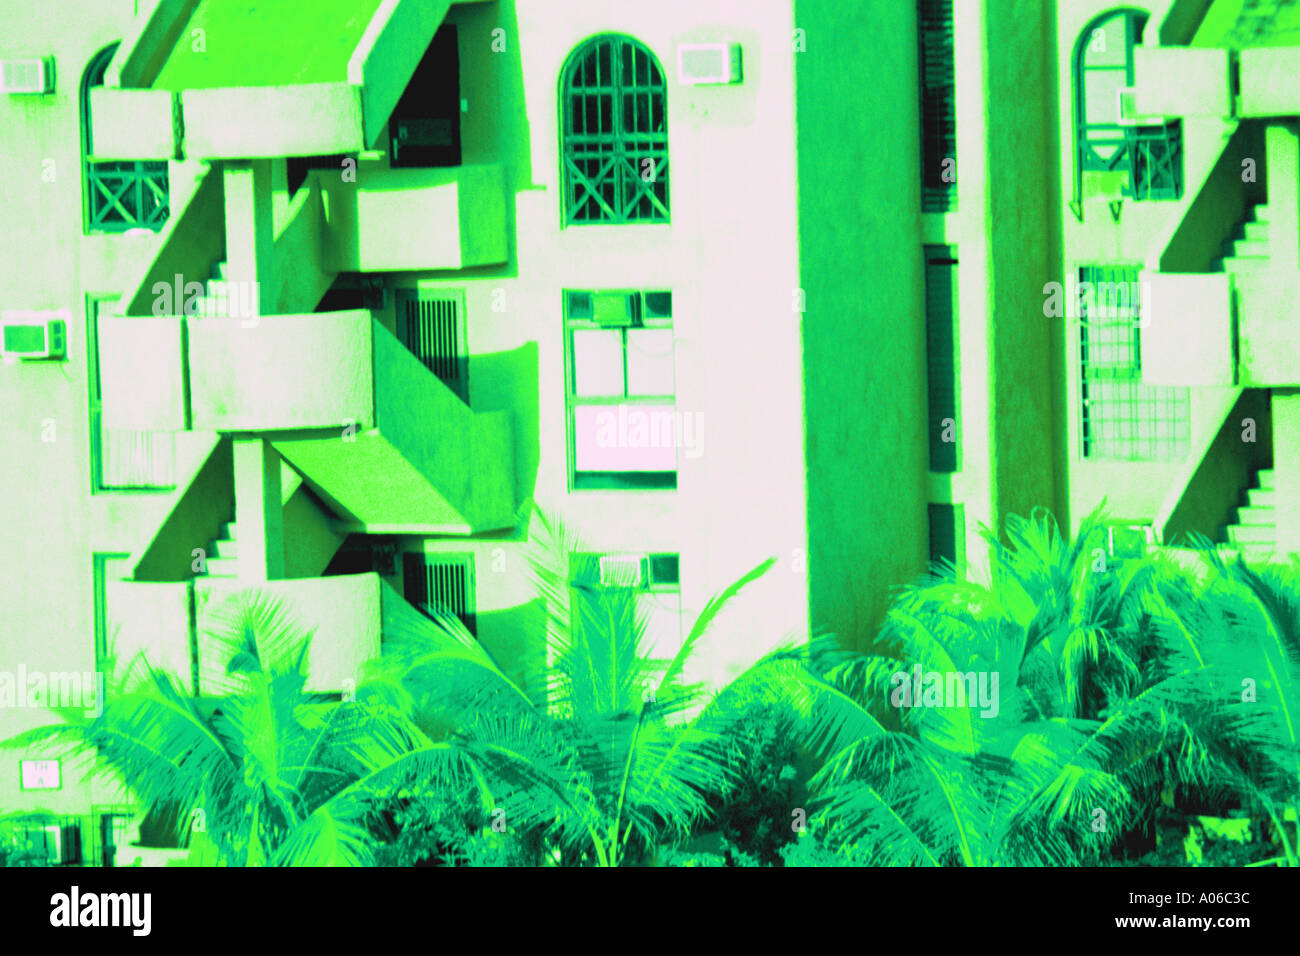 Green apartment staircases art Margarita Island 199 Stock Photo